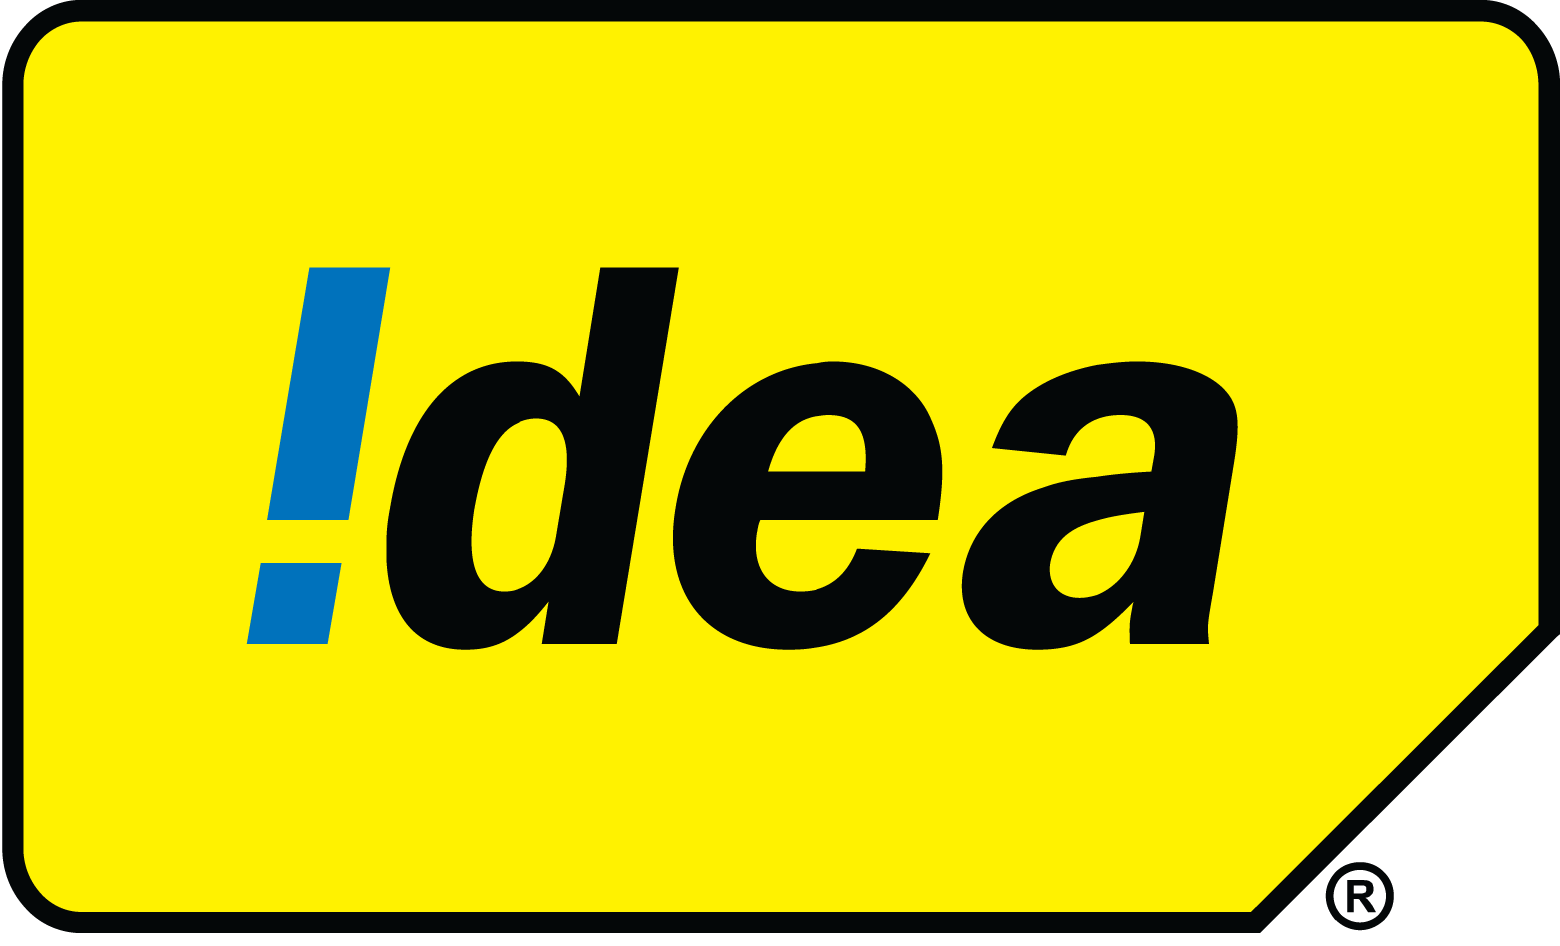 IDEEA Logo photo - 1